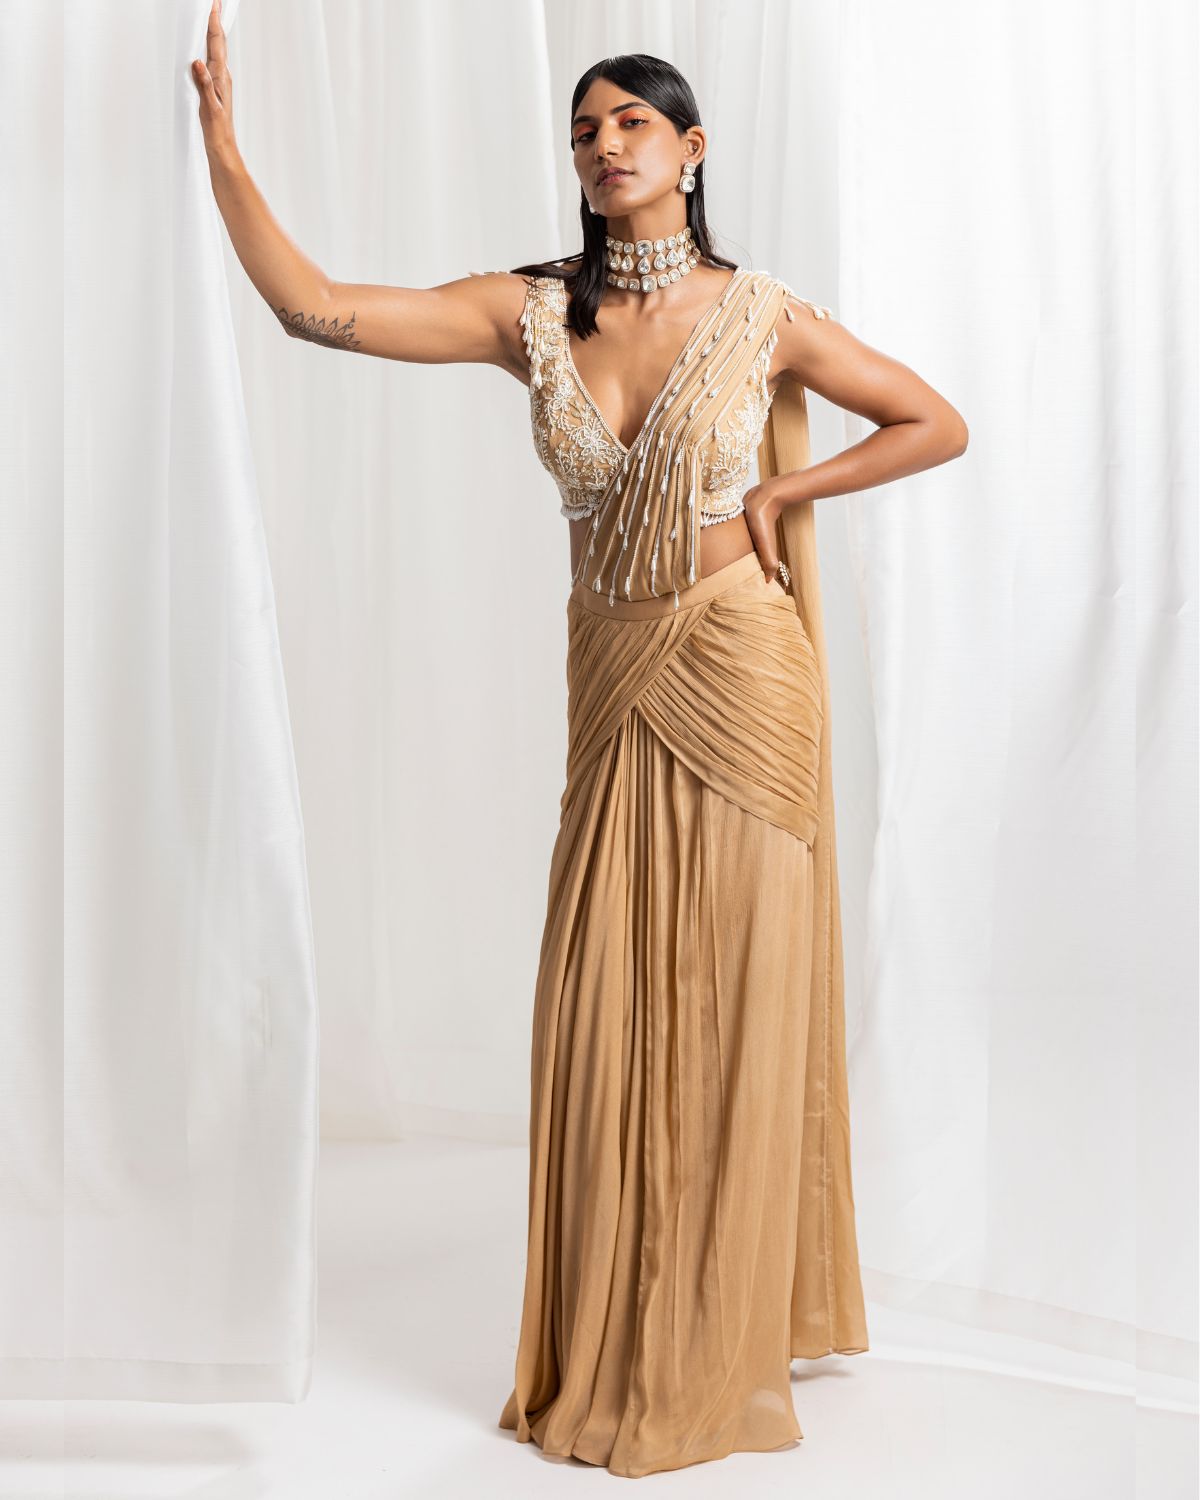 Dune Gold Pre-Stitched Sari Set by Seema Thukral